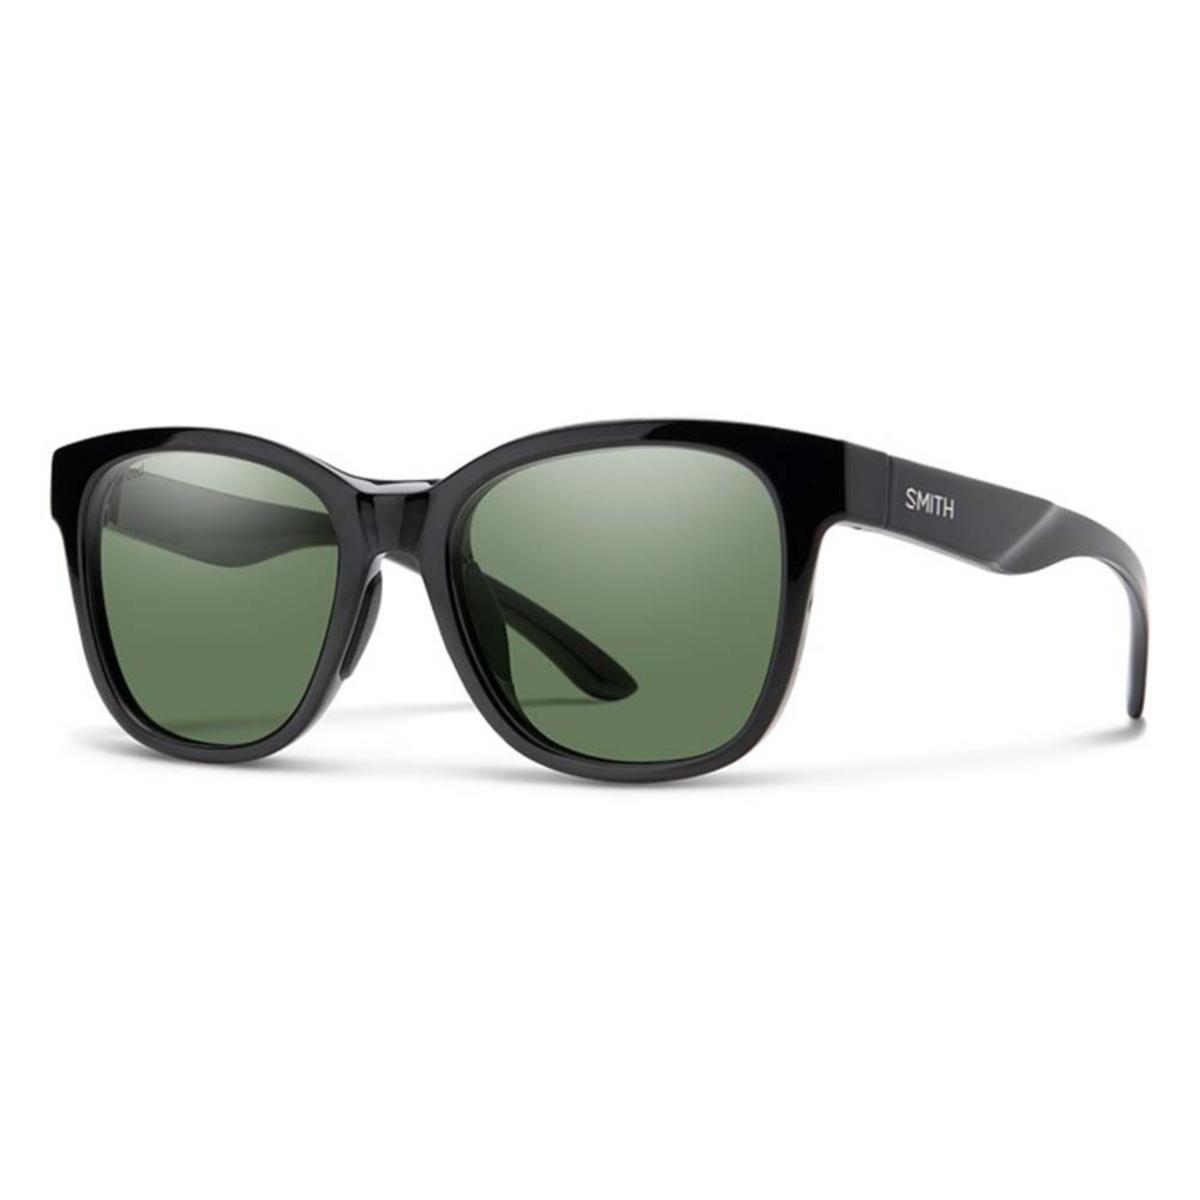 Smith Optics Caper Sunglasses Polarized Gray Green - Black Frame